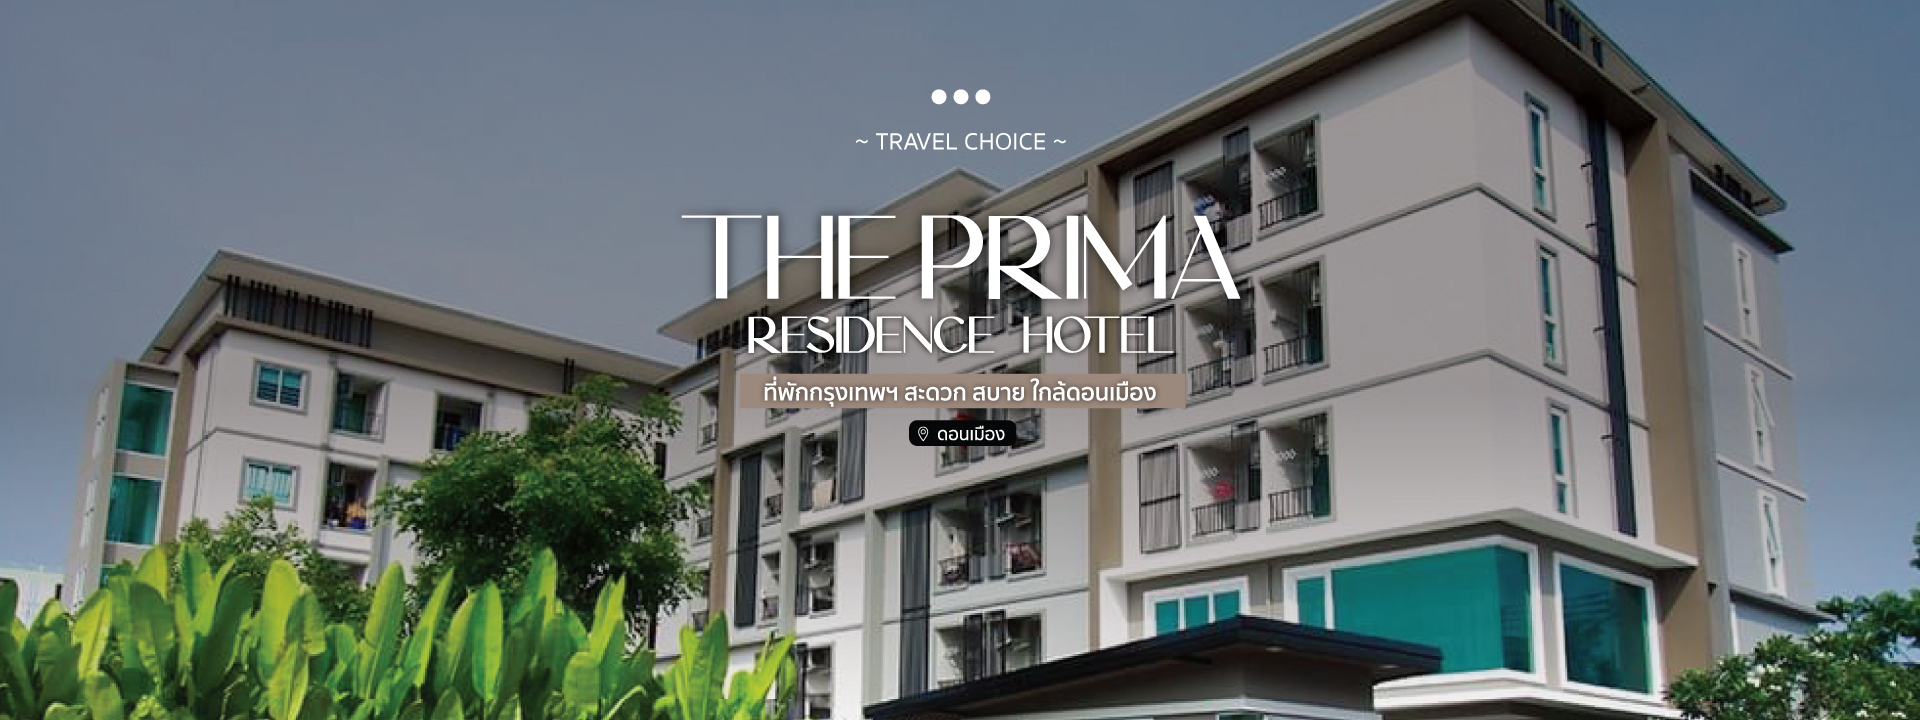 The Prima Residence Hotel ที่พักกรุงเทพฯ สะดวก สบาย ใกล้ดอนเมือง